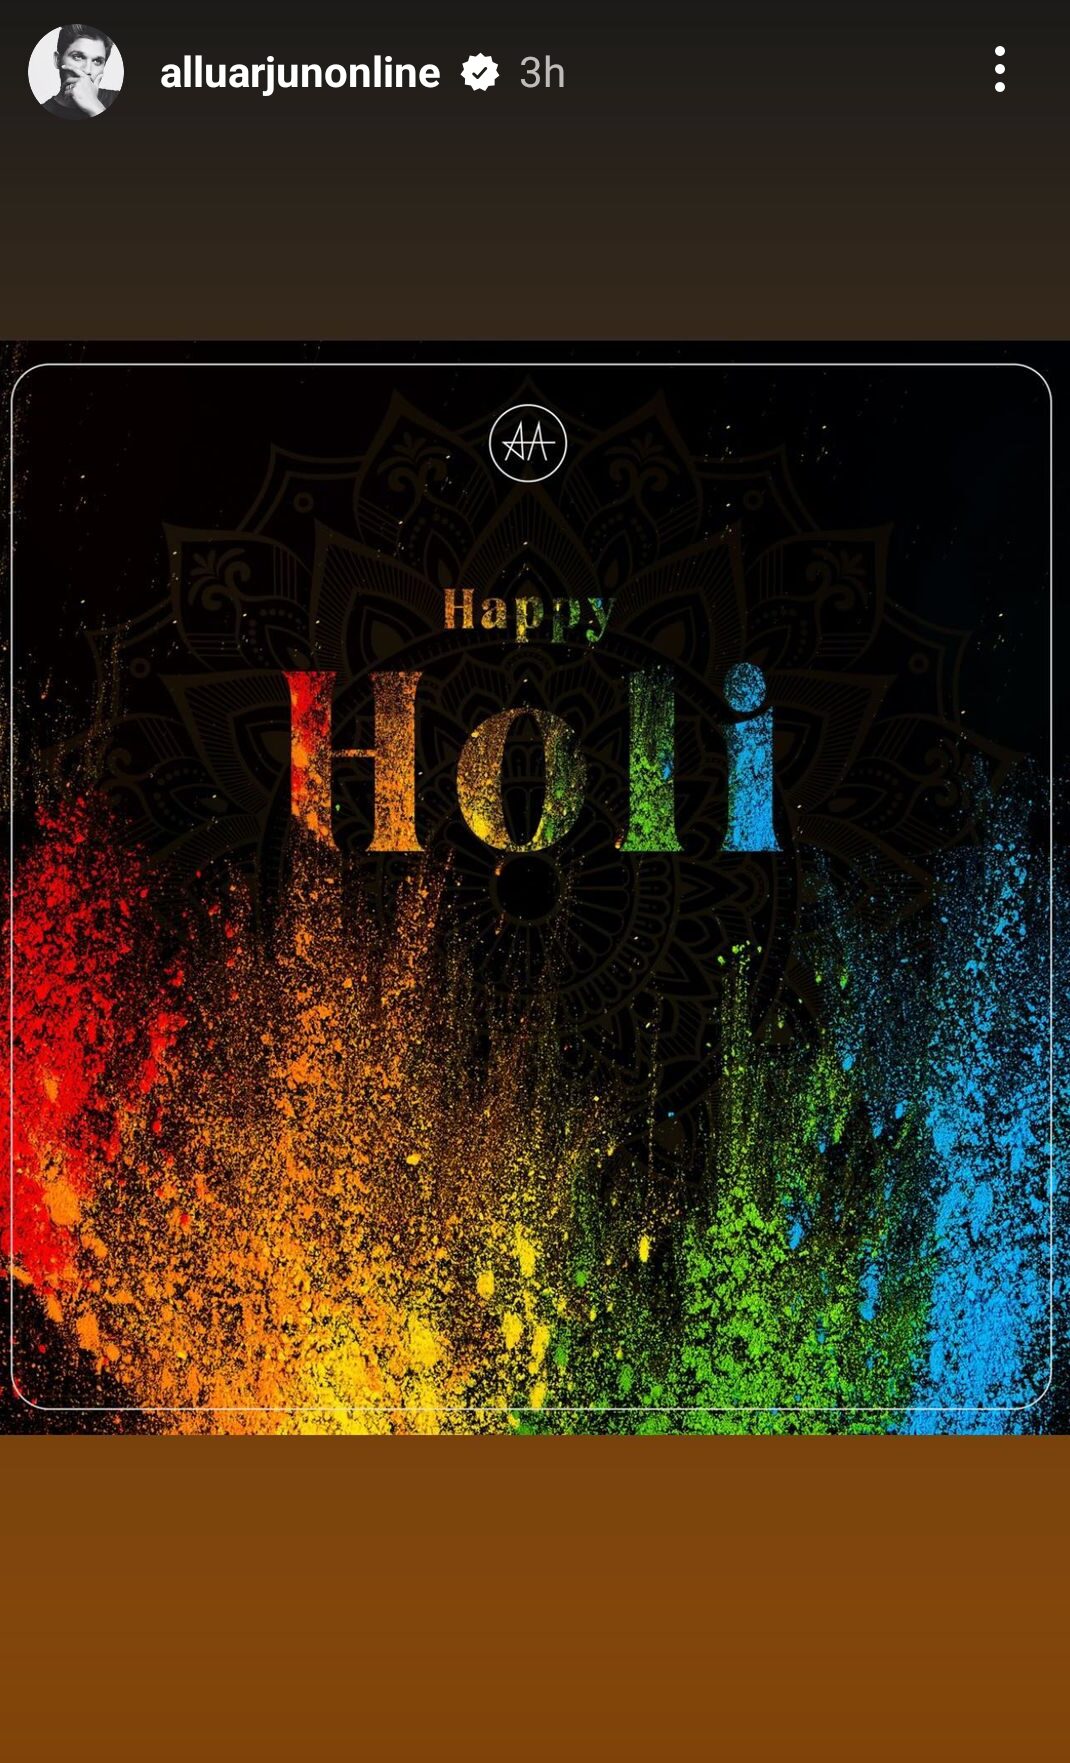 Happy Holi 